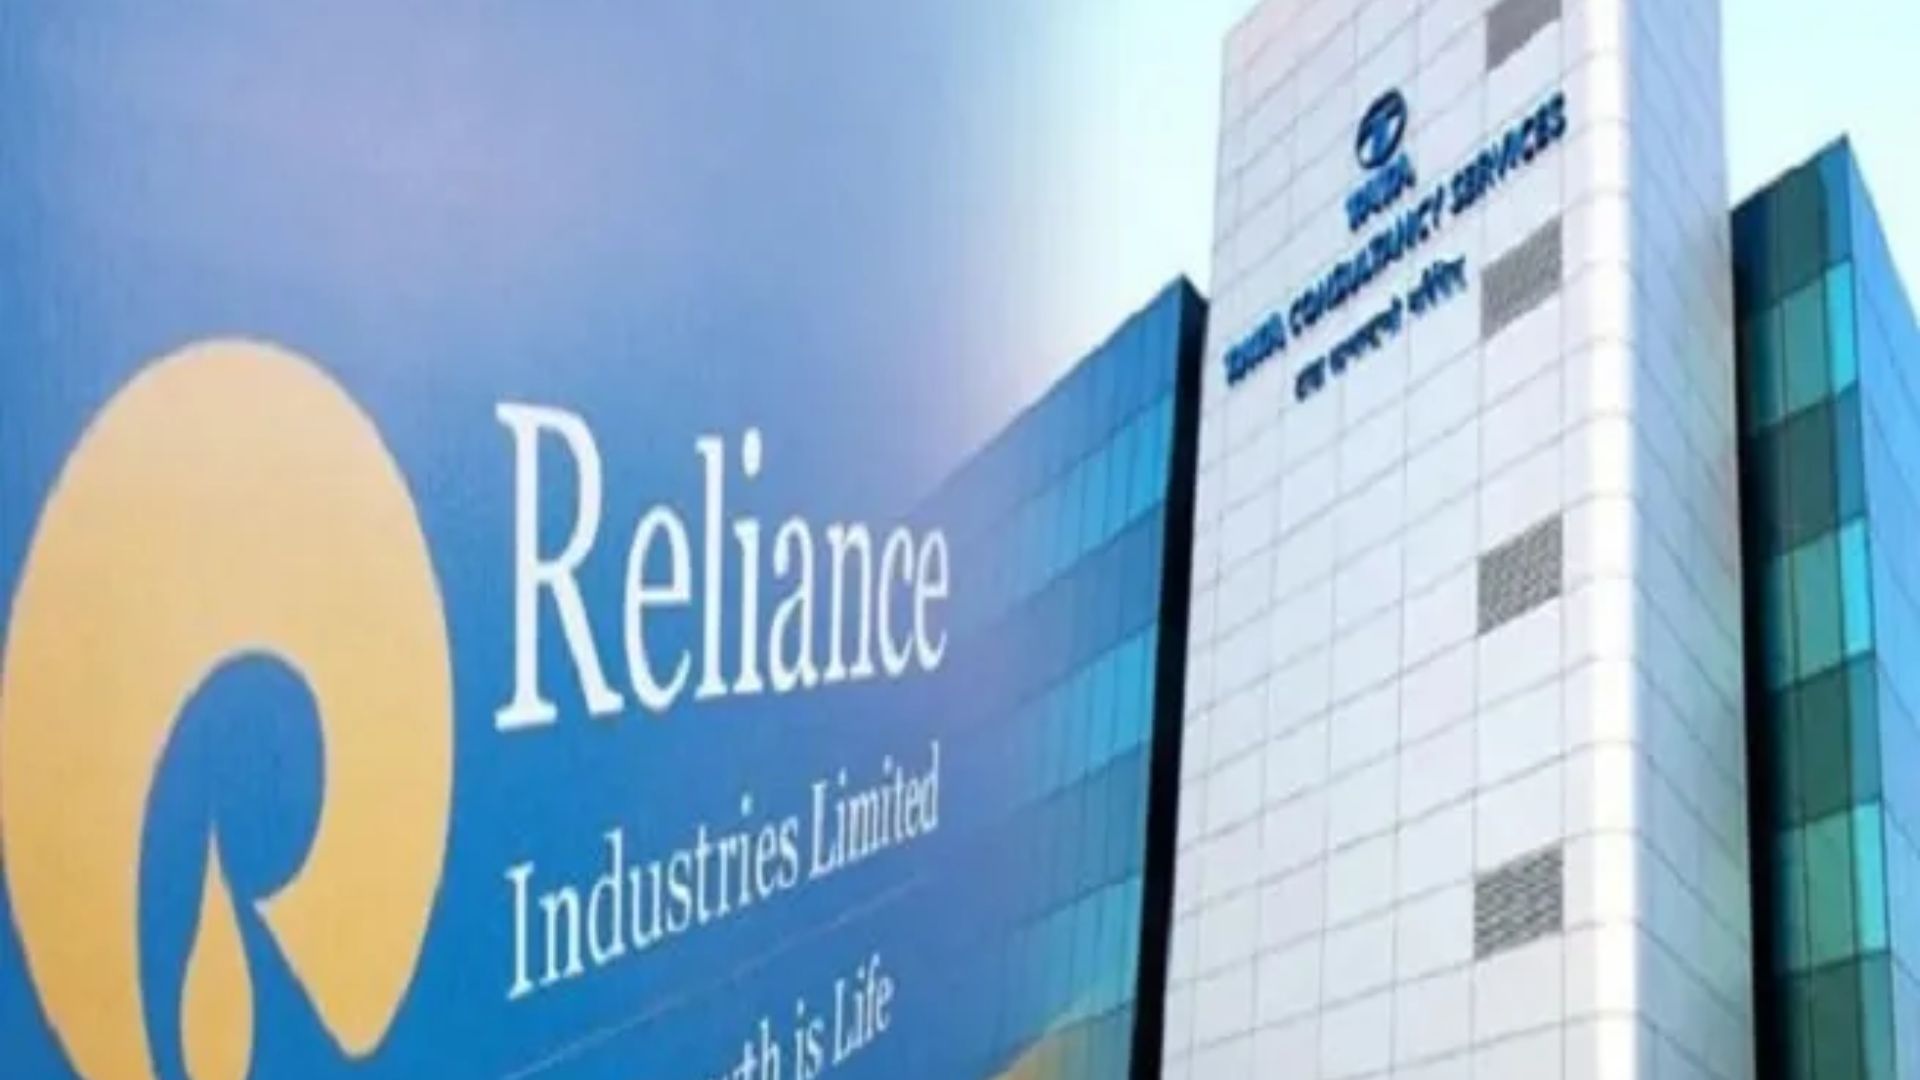 शीर्ष दस कंपनियों का बाजार पूंजीकरण 2.09 लाख करोड़ रुपये घटा, Reliance-TCS को सबसे ज्यादा नुकसान 